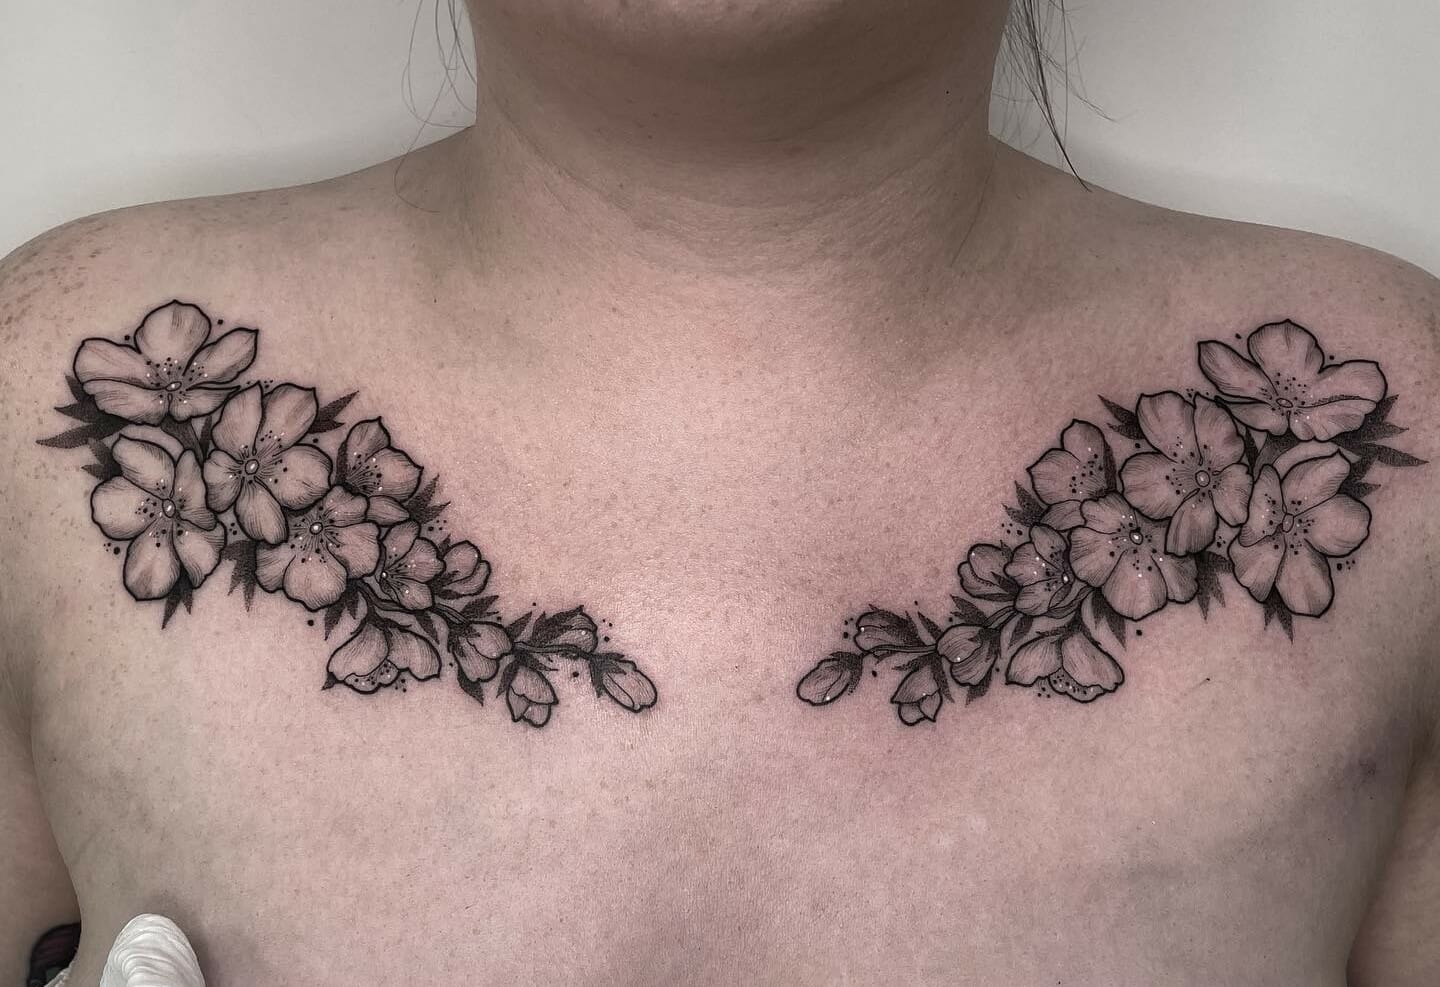 10 Best Flower Collarbone Tattoo Ideas That Will Blow Your Mind!

+2023